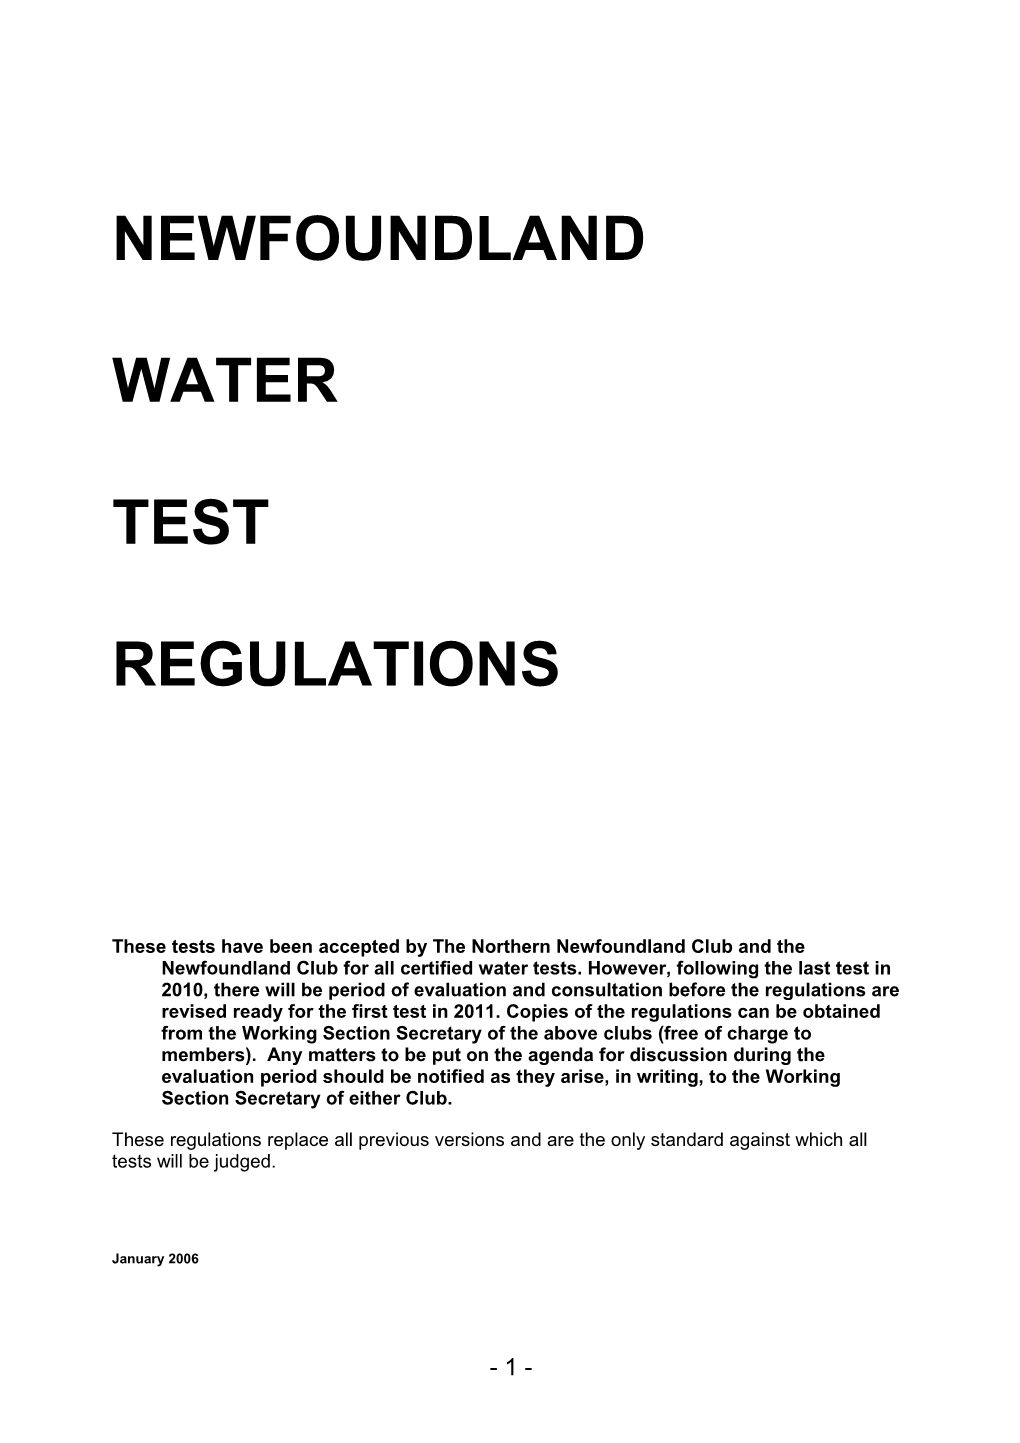 Newfoundland Water Test Regulations